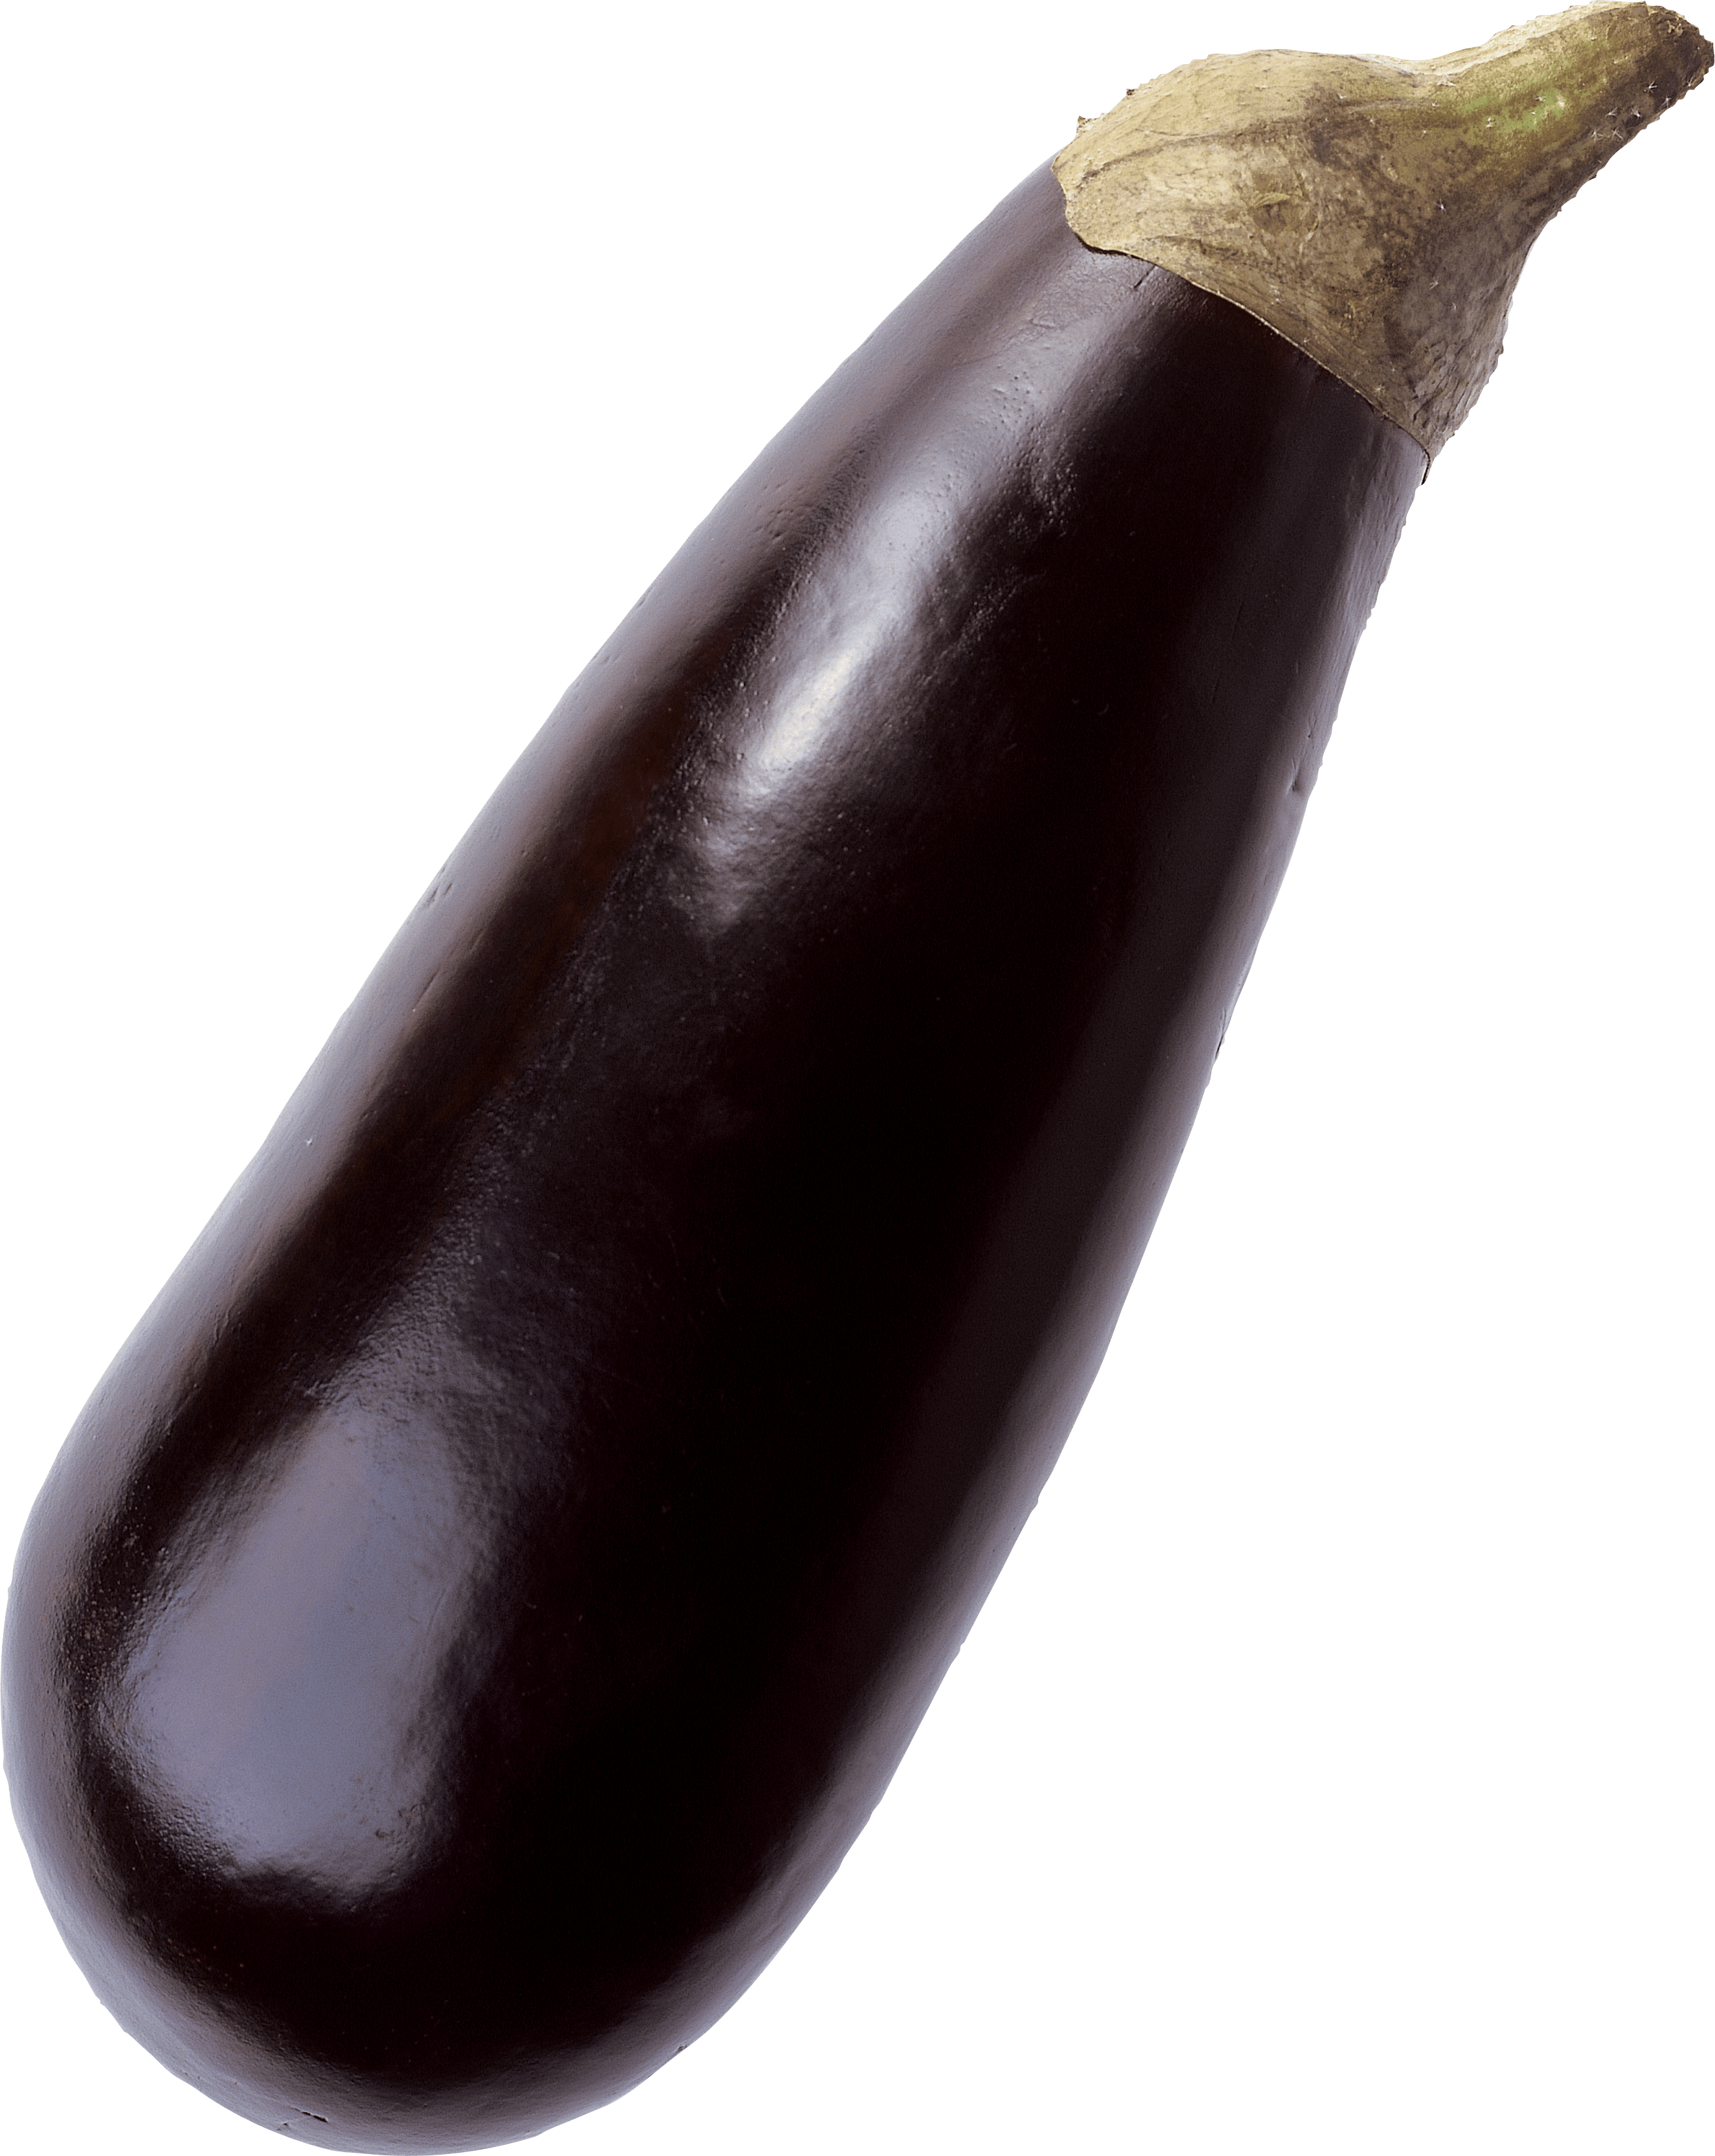 Eggplant brinjol